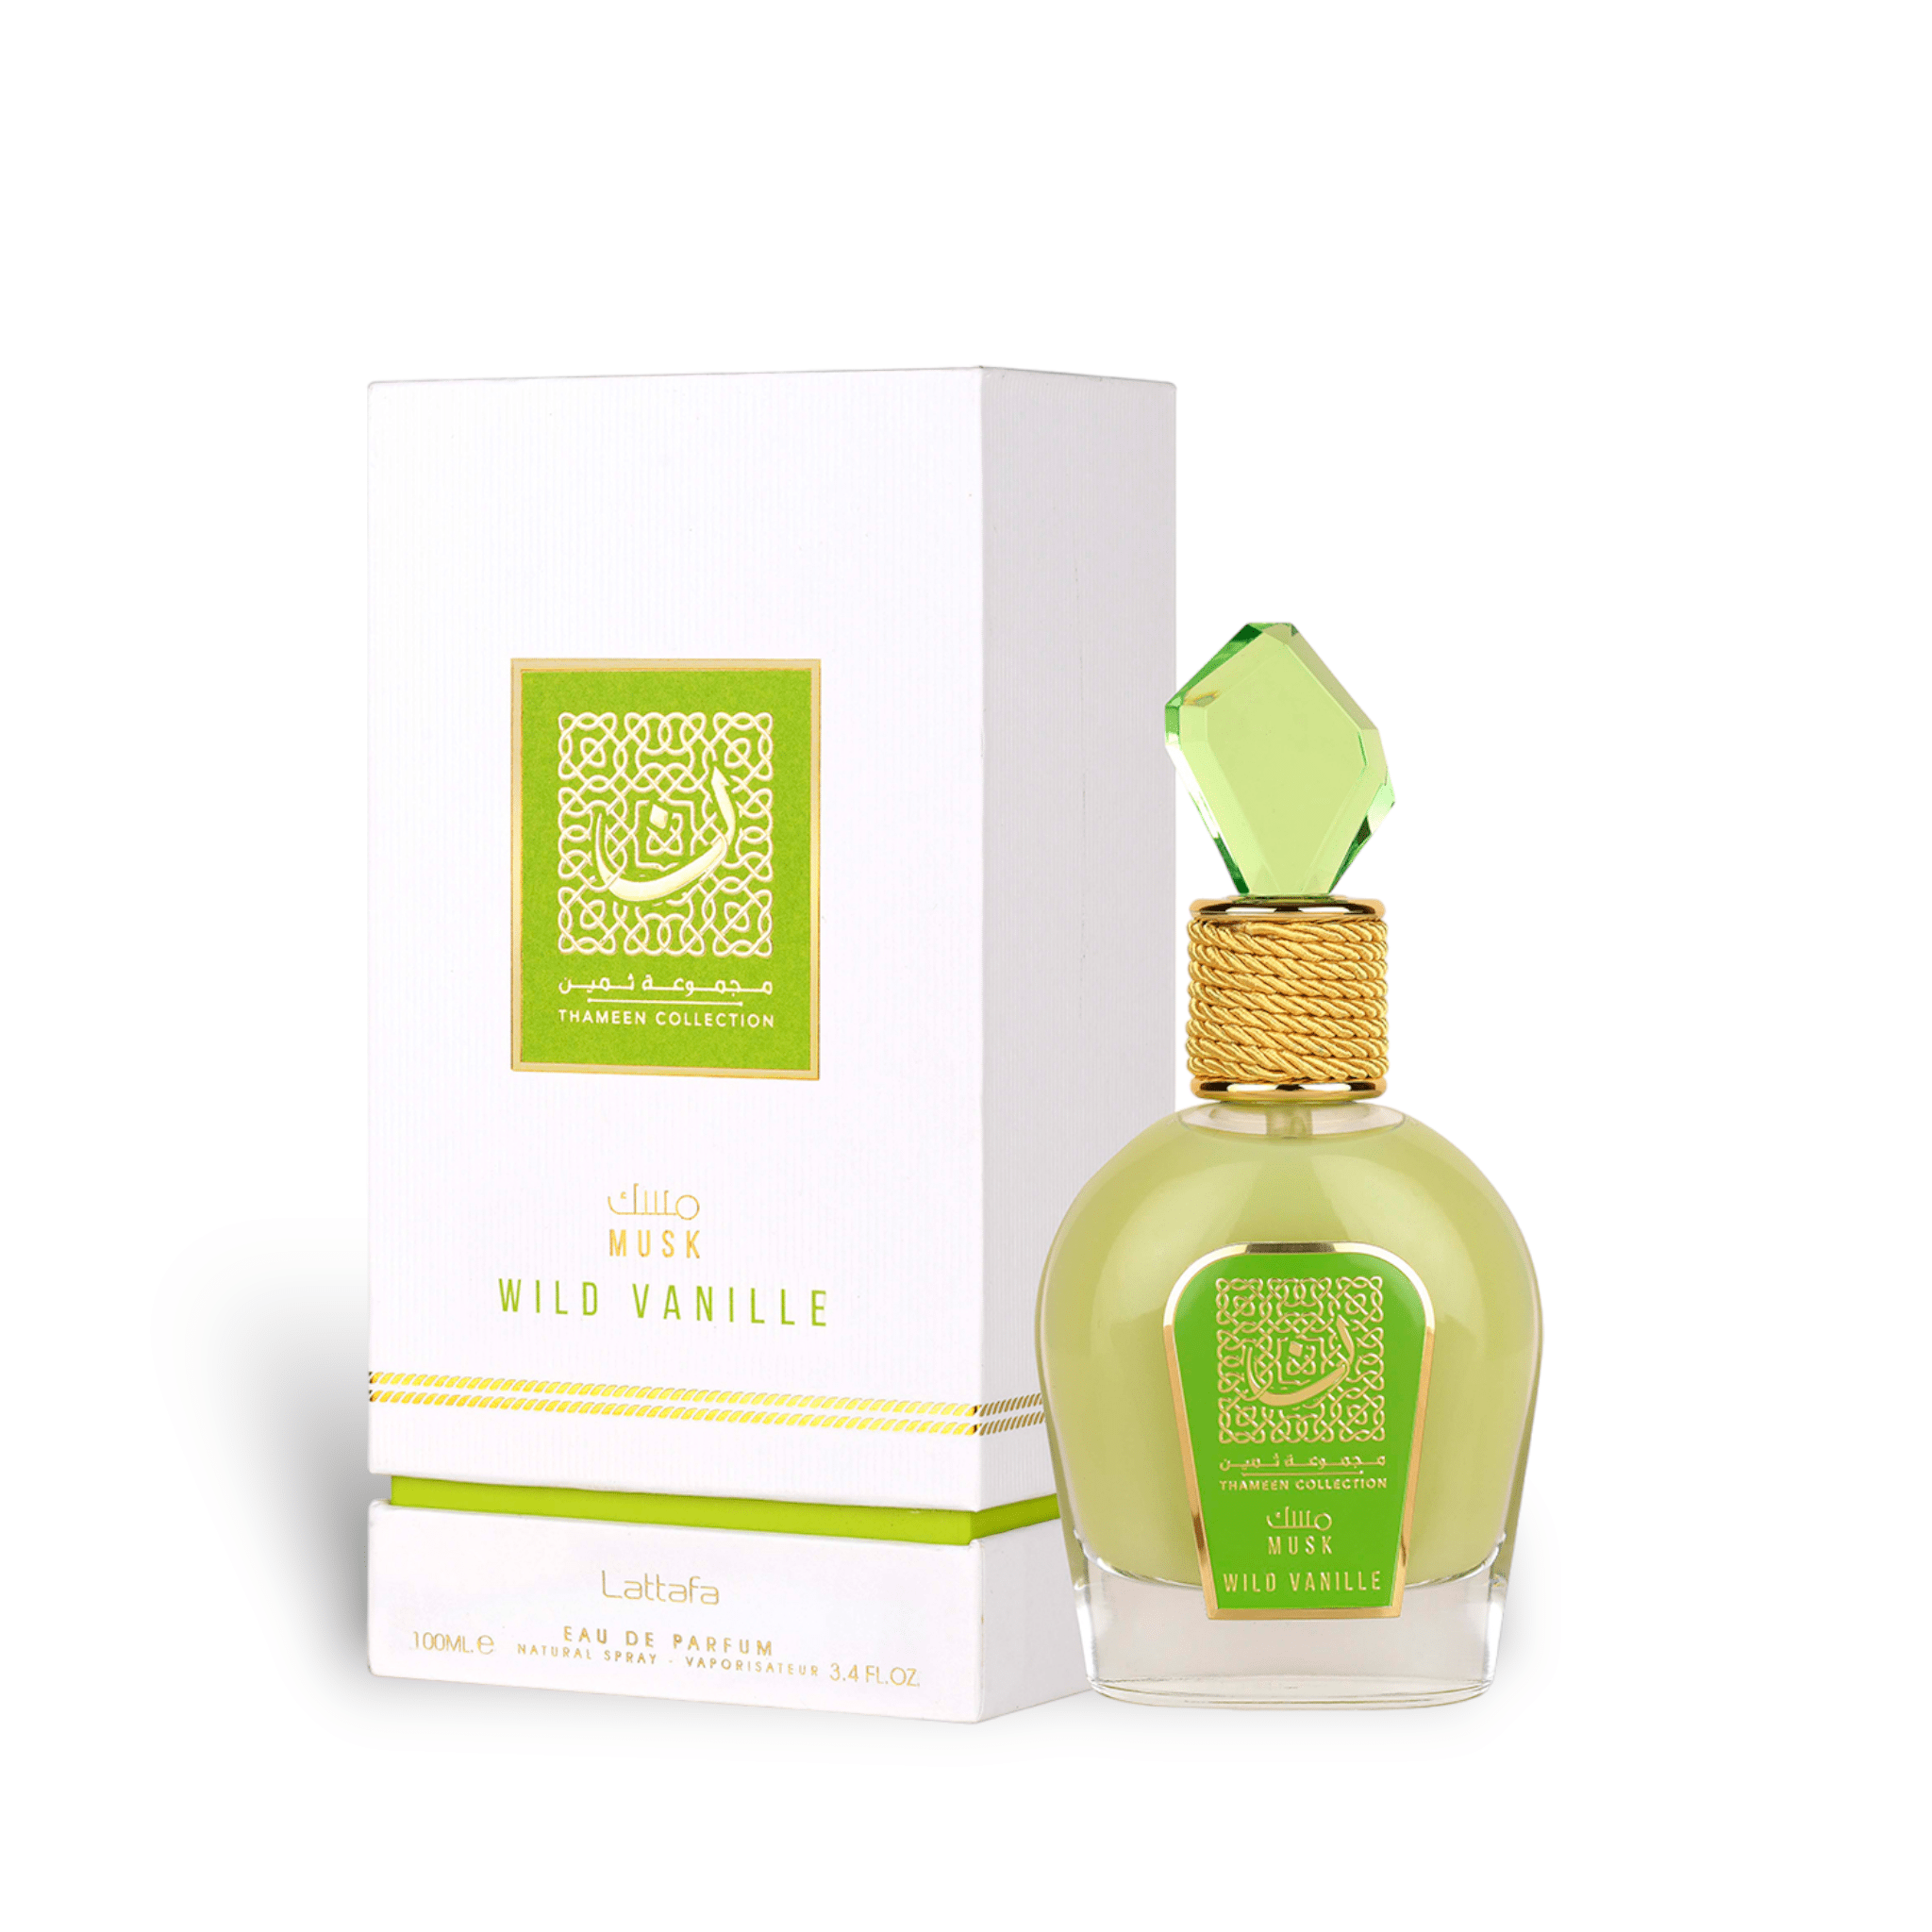 Musk Wild Vanille (Thameen Collection) Perfume Eau De Parfum 100Ml By Lattafa